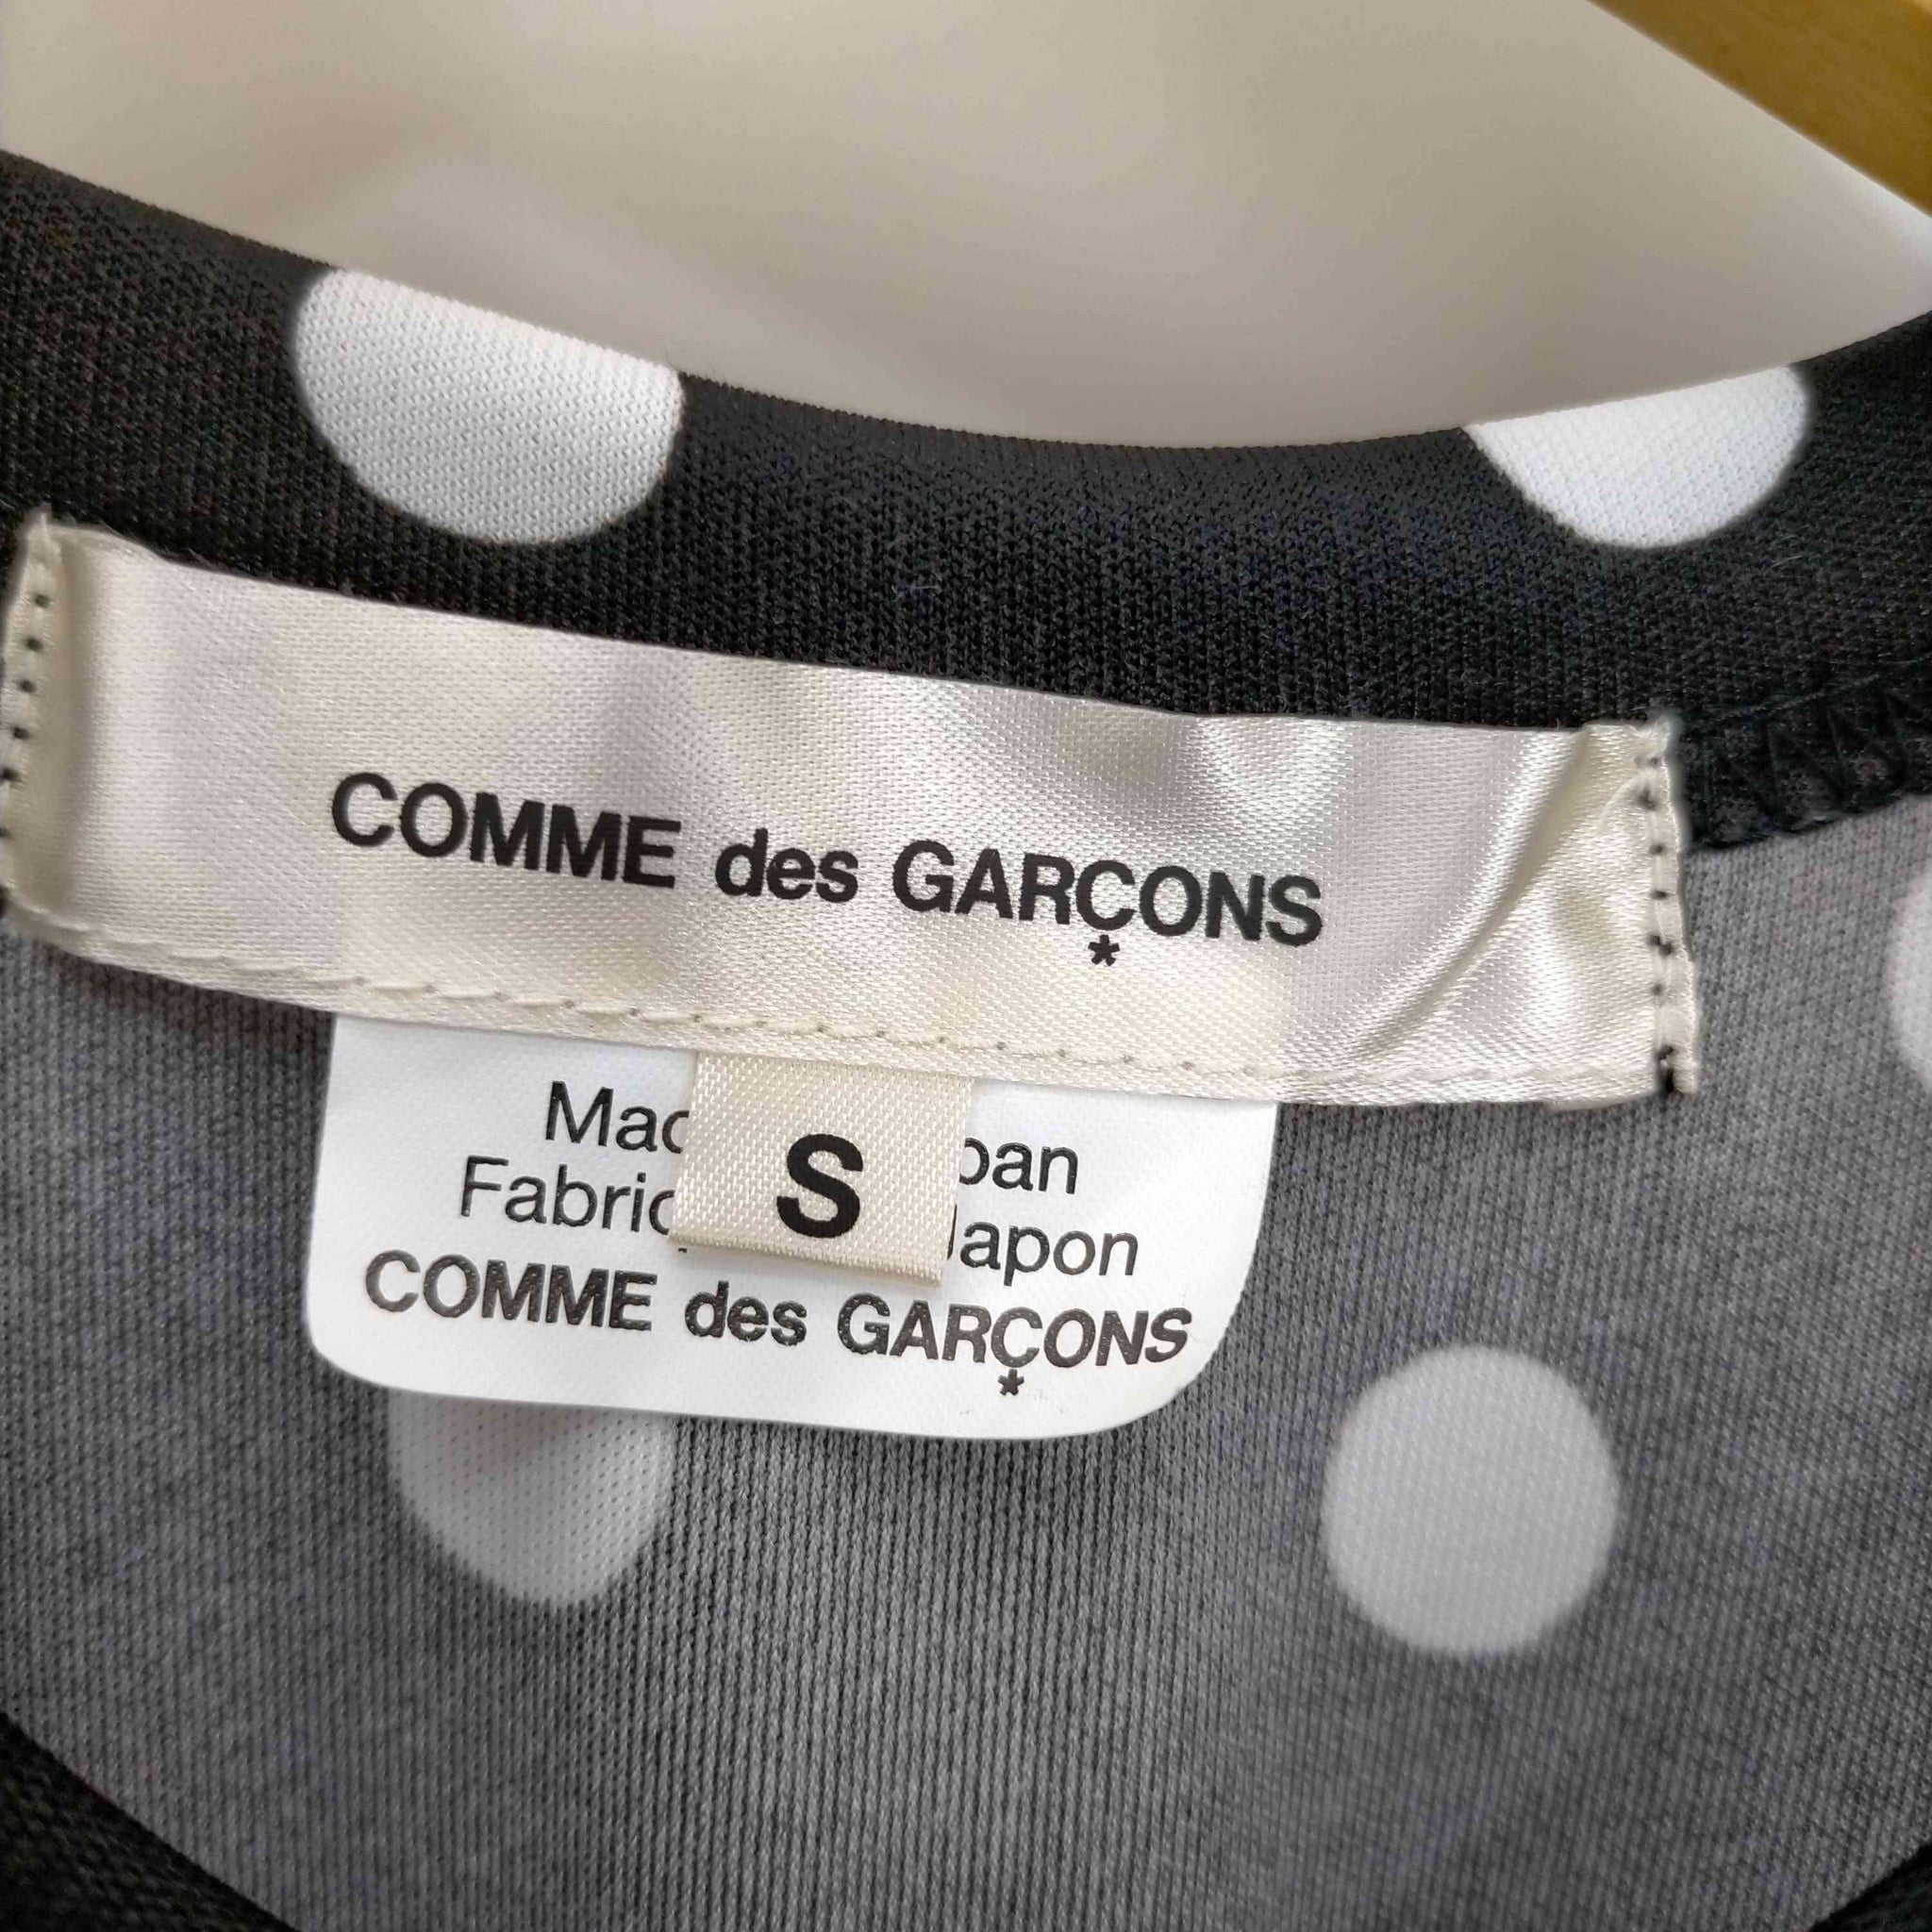 COMME des GARCONS(コムデギャルソン)21AW モノクロームの世界期 裾ボリュームギャザー切替ドットプリントTシャツ